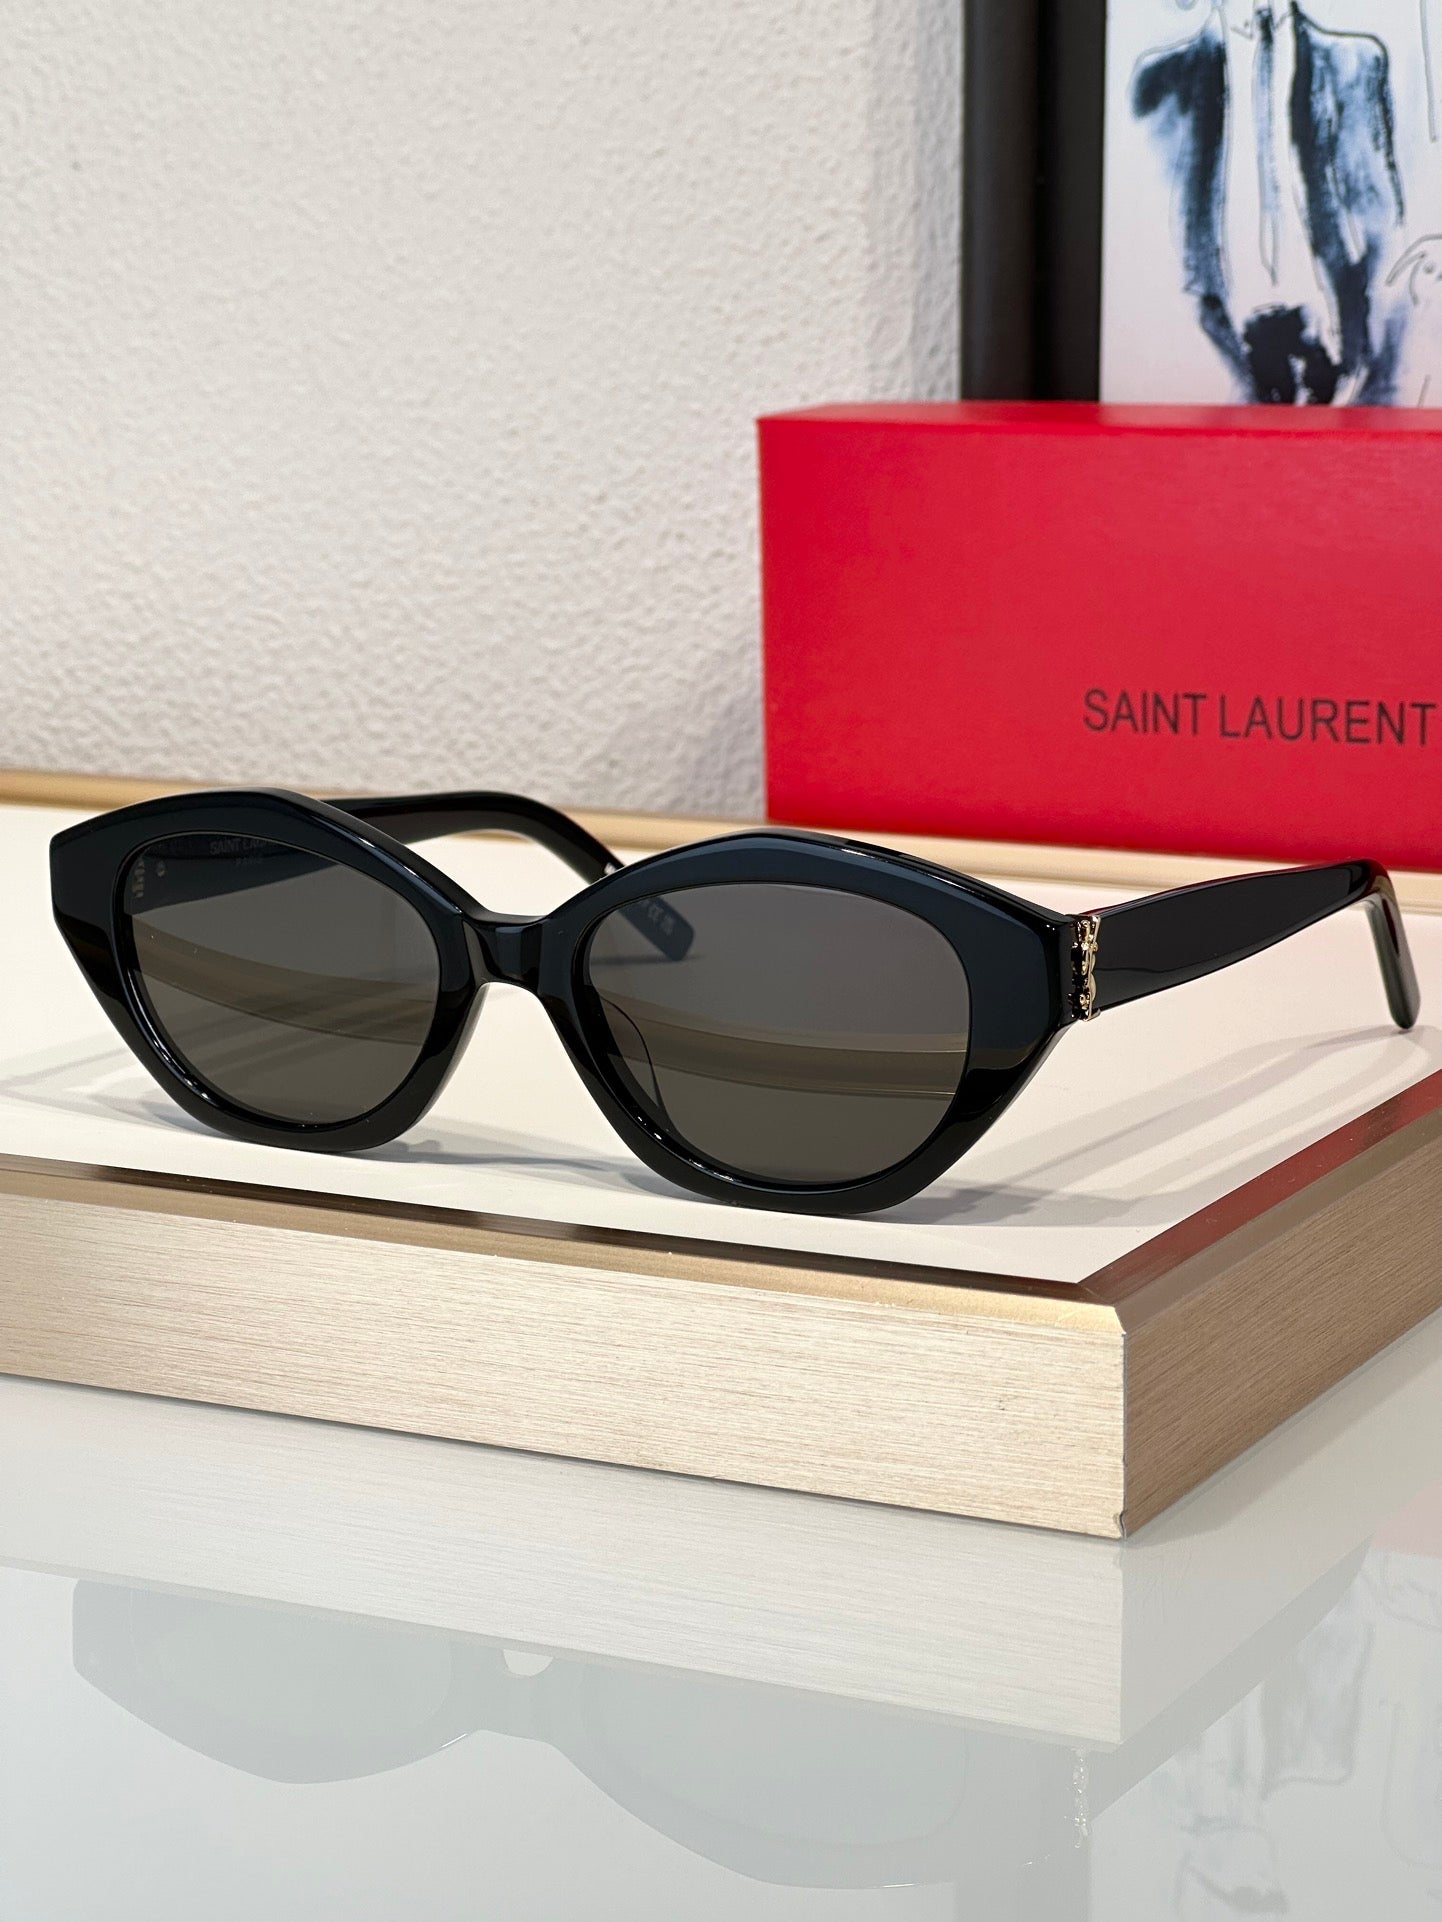 YSL Saint Laurent SLM60 006 54 19 Women's Sunglasses Sunglasses ✨ - buyonlinebehappy